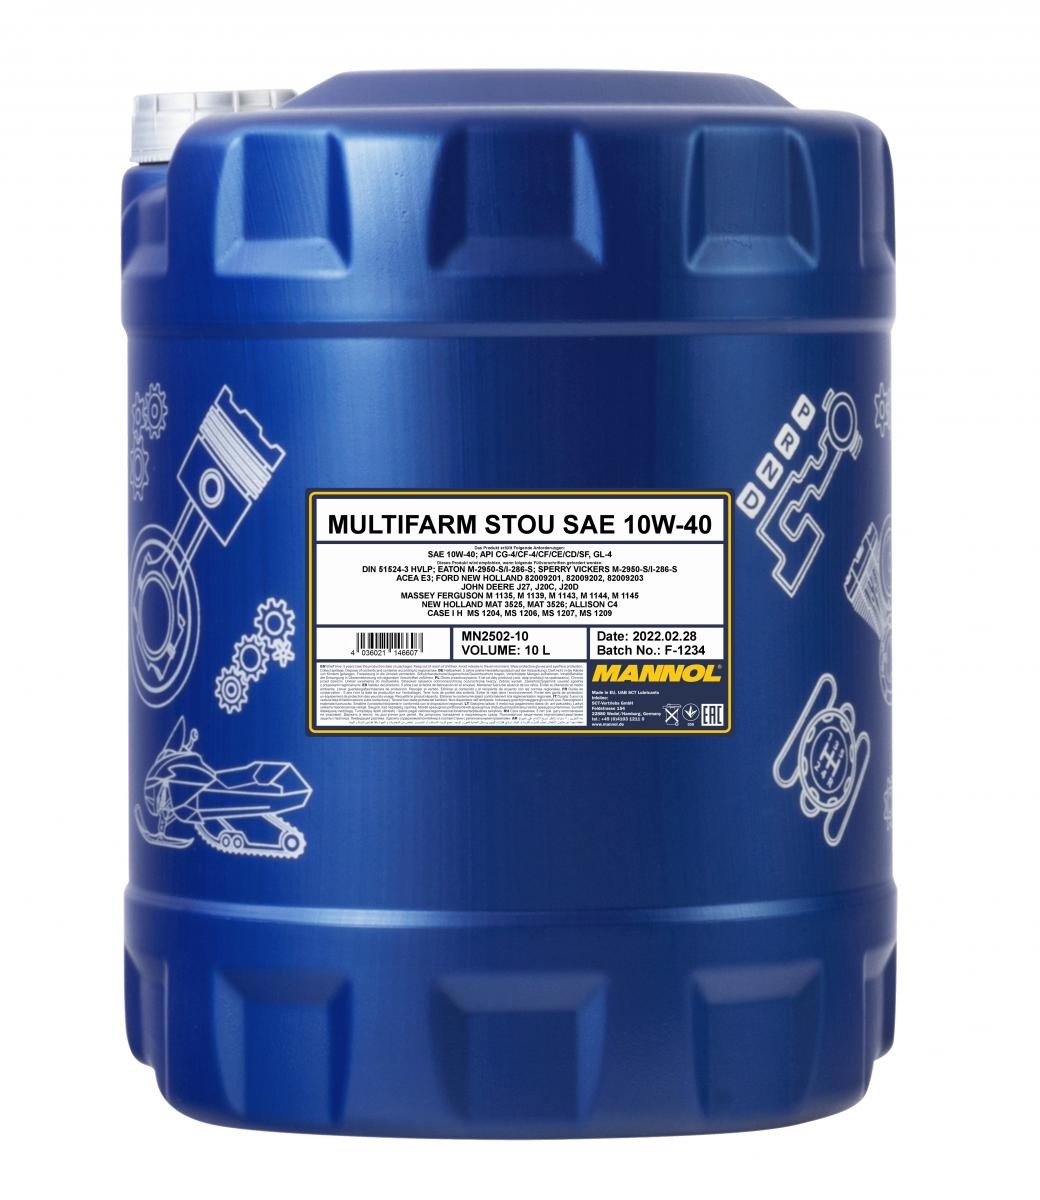 Car oil API GL 4 MANNOL - MN2502-10 Multifarm, STOU